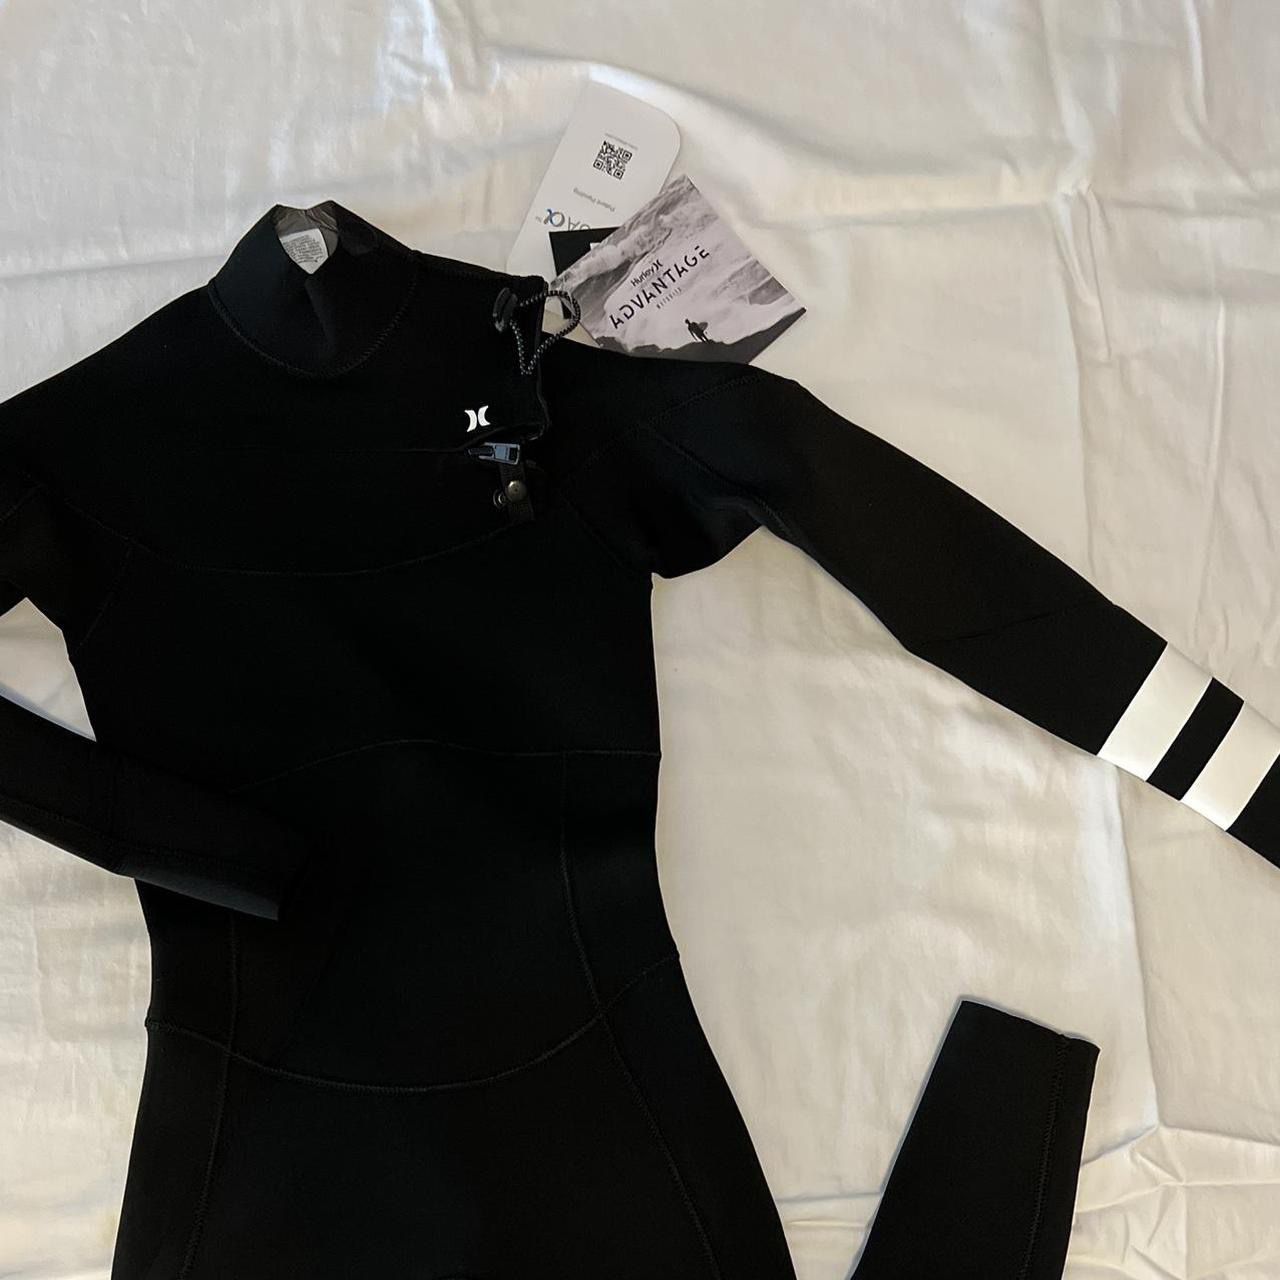 Women’s Hurley Wetsuit for Sale in Brea, CA - OfferUp